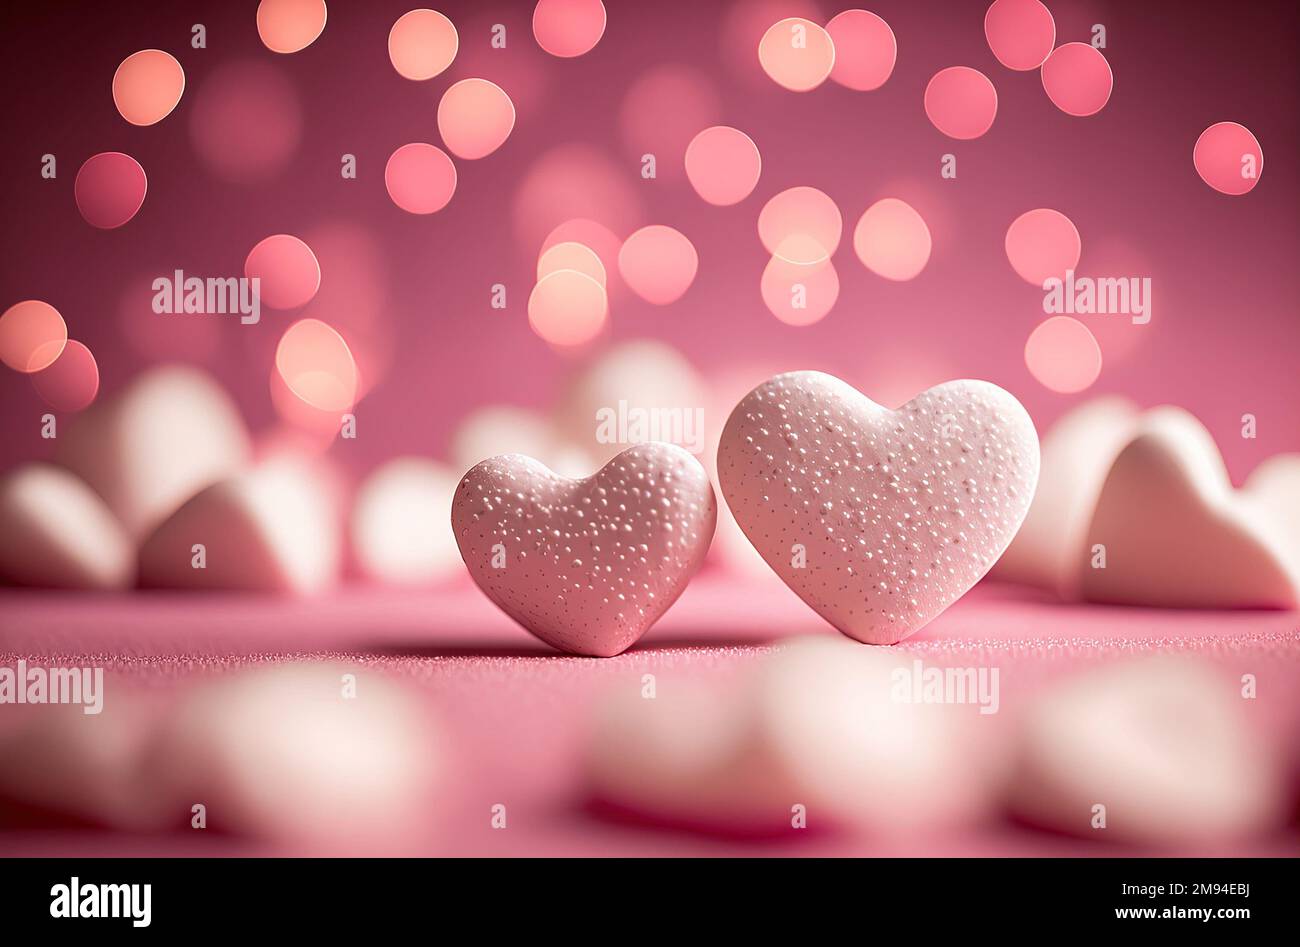 Free Pink Glitter Heart Background  Download in Illustrator EPS SVG JPG   Templatenet